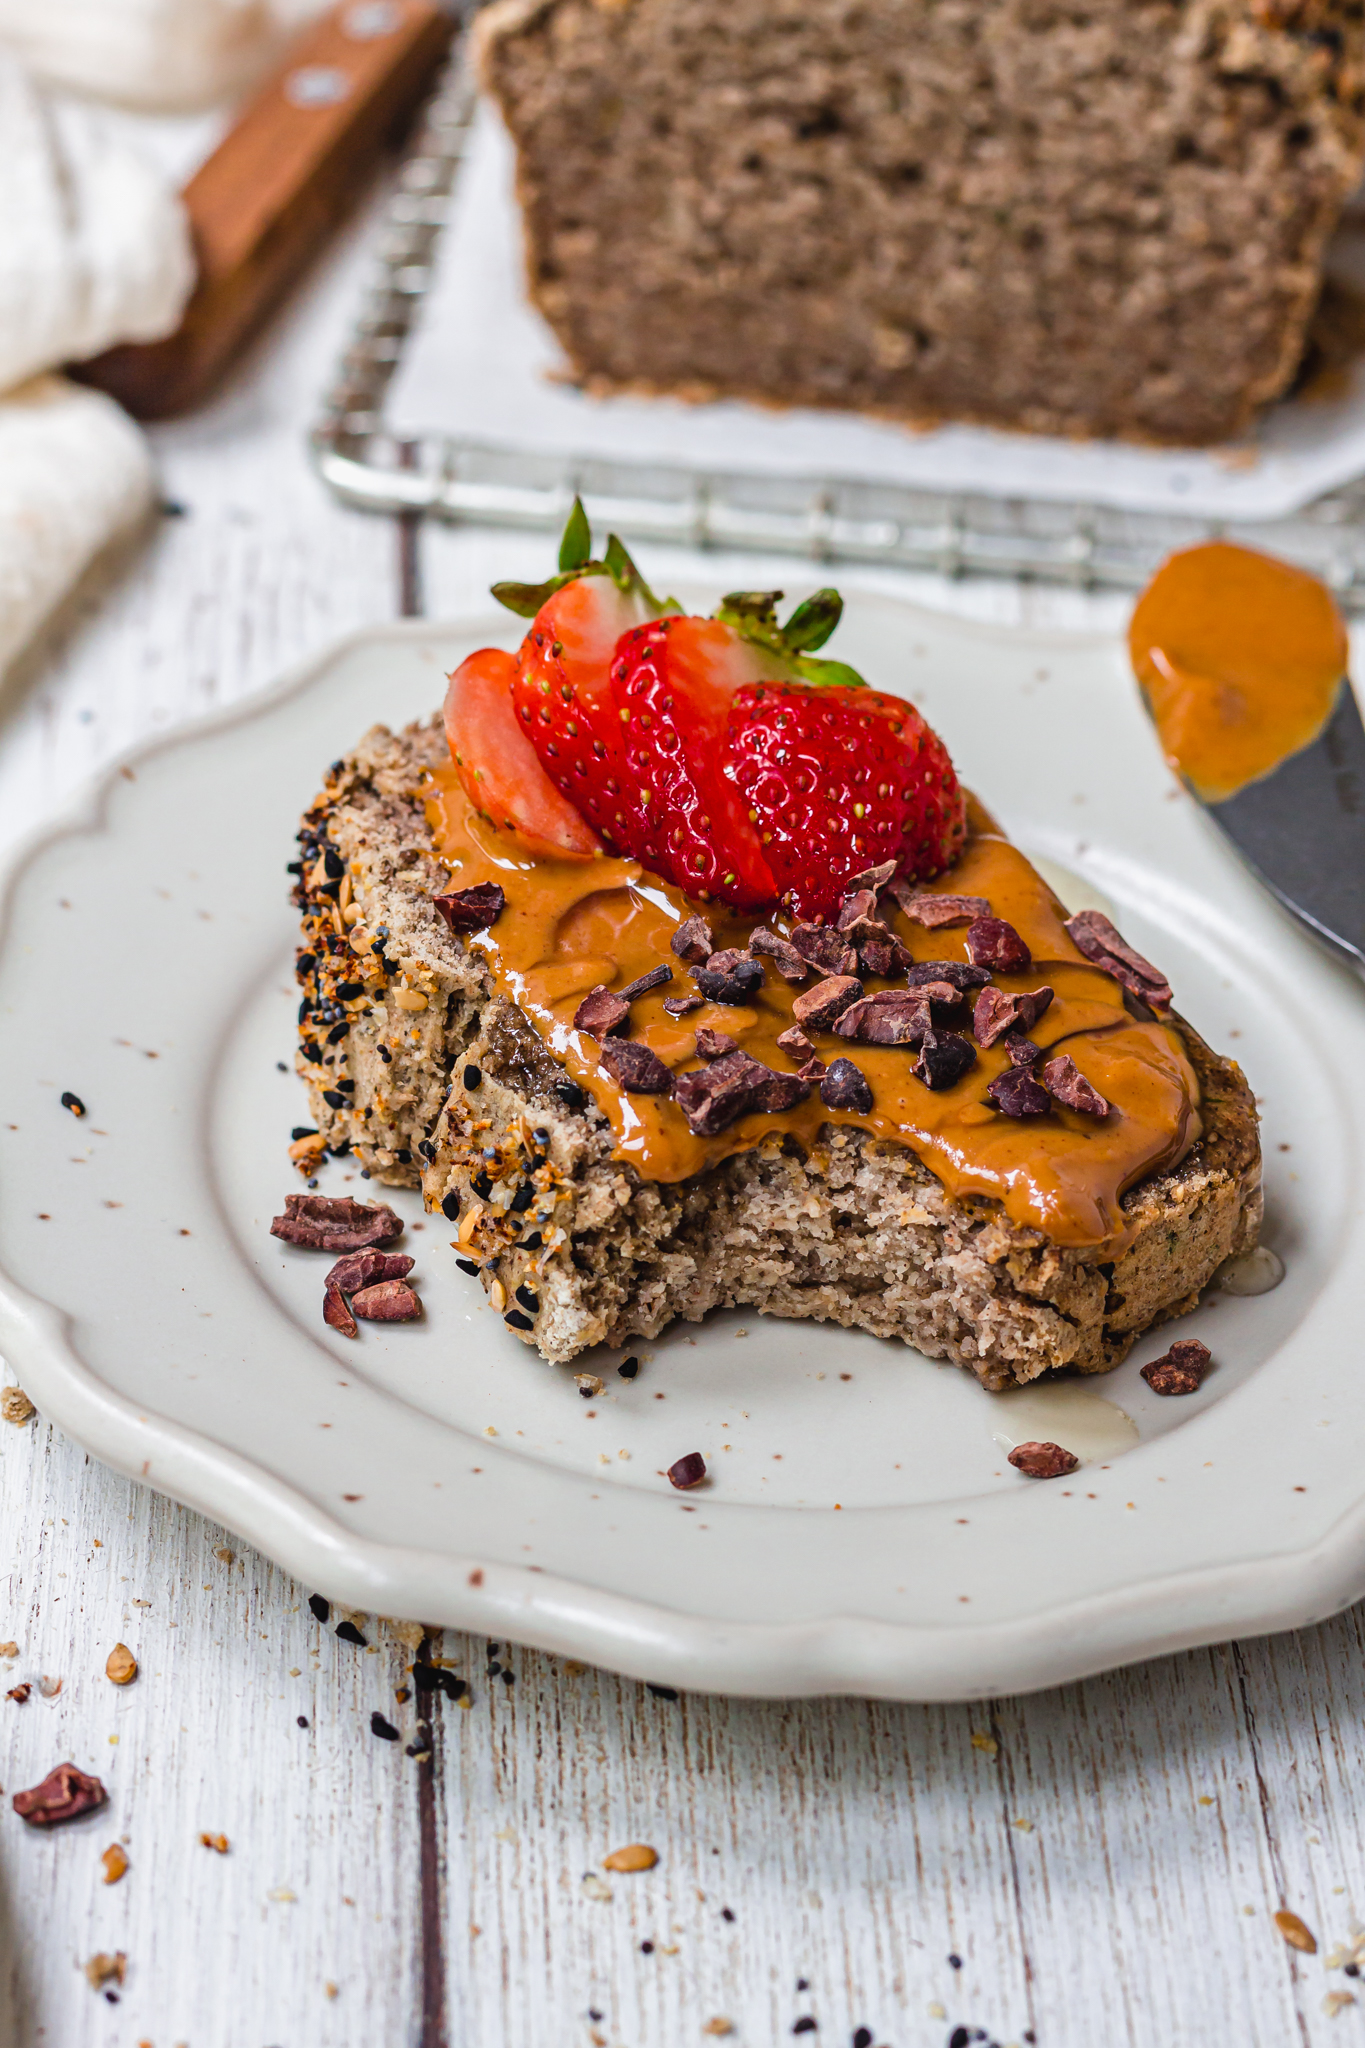 Peanut butter and strawberries on a slice of Gluten-Free Vegan Buckwheat Bread